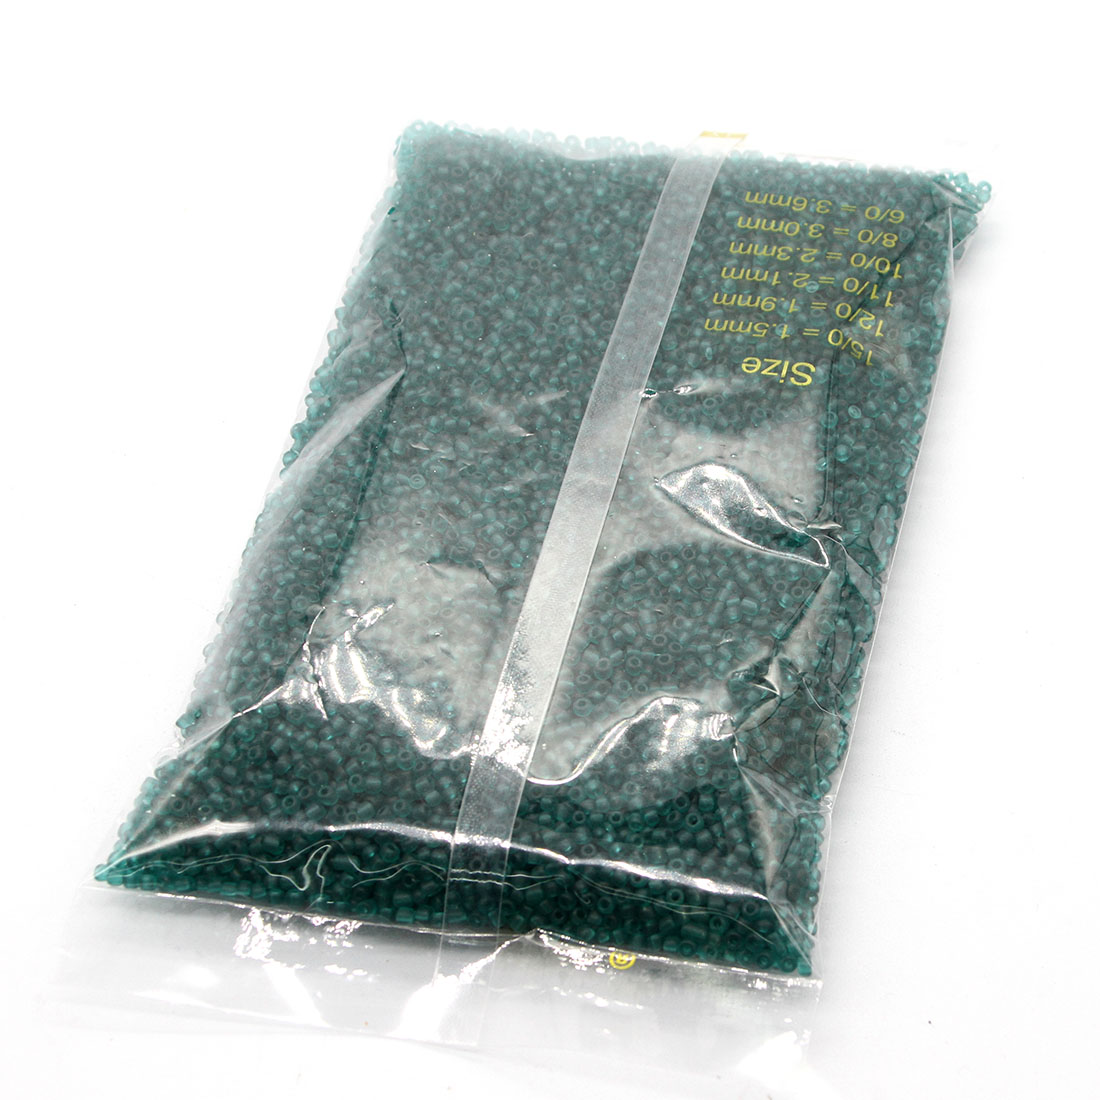 Dark green 3mm 10,000 packs